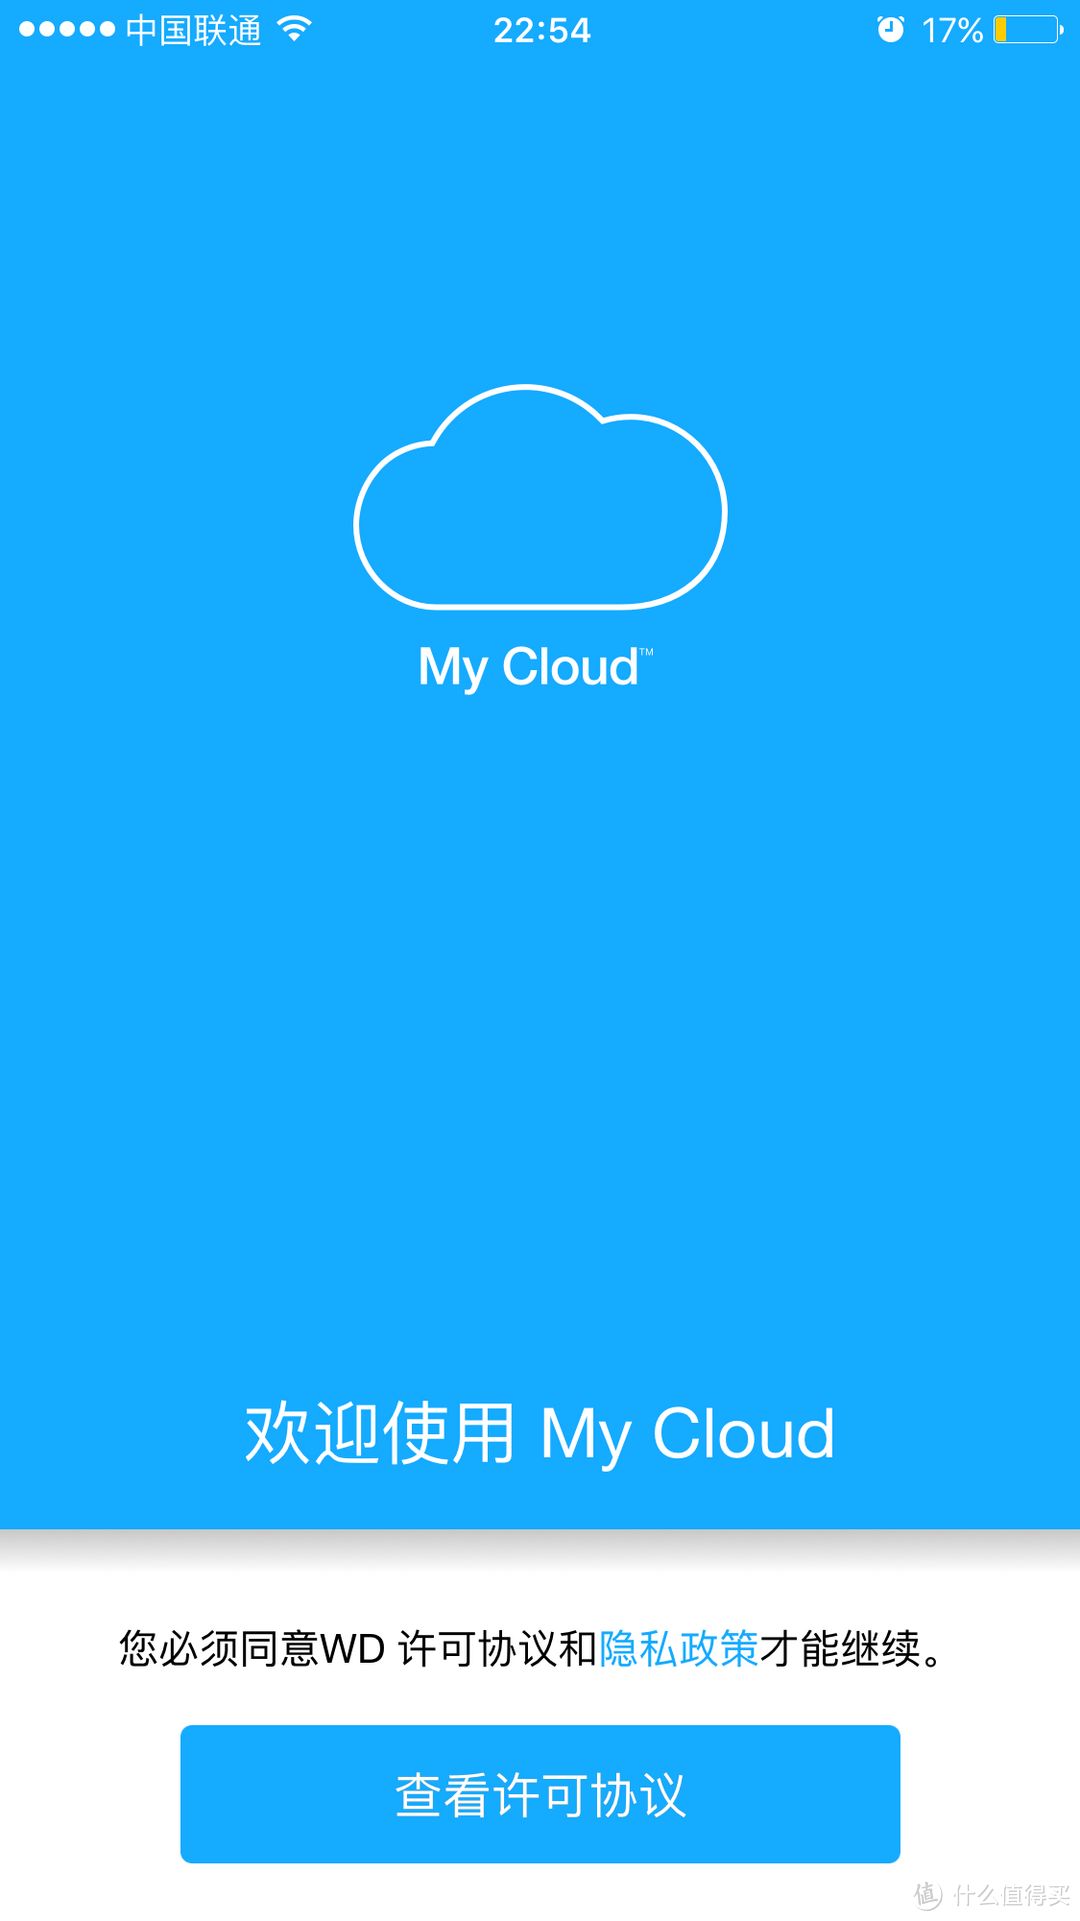 WD 西部数据 My Cloud 6TB NAS 个人云存储开箱及初步体验